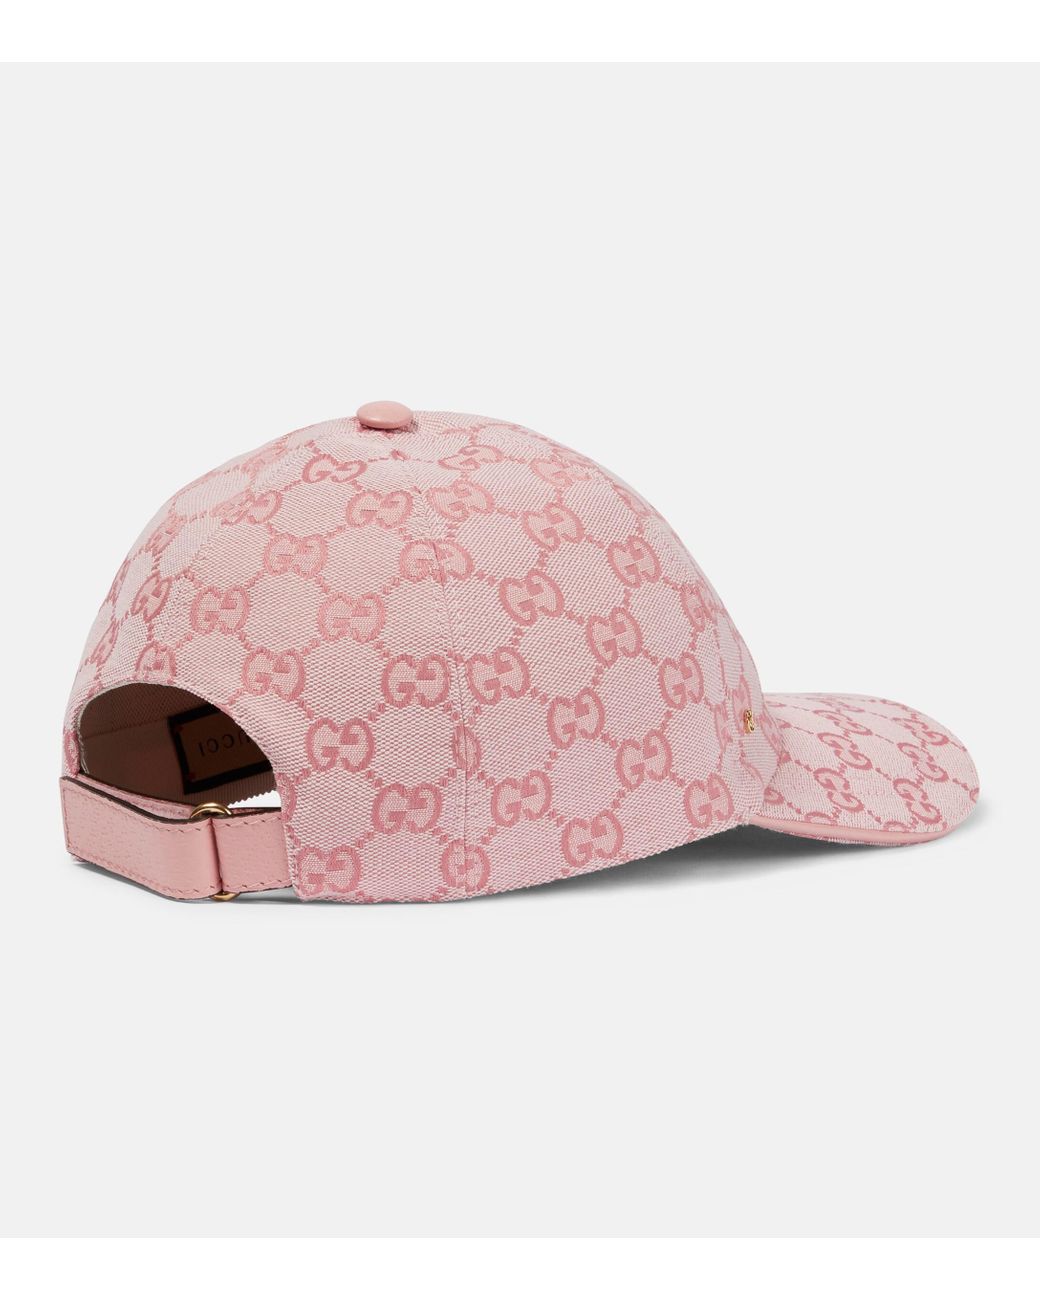 Gucci GG Supreme Canvas Baseball Cap in Pink | Lyst Canada